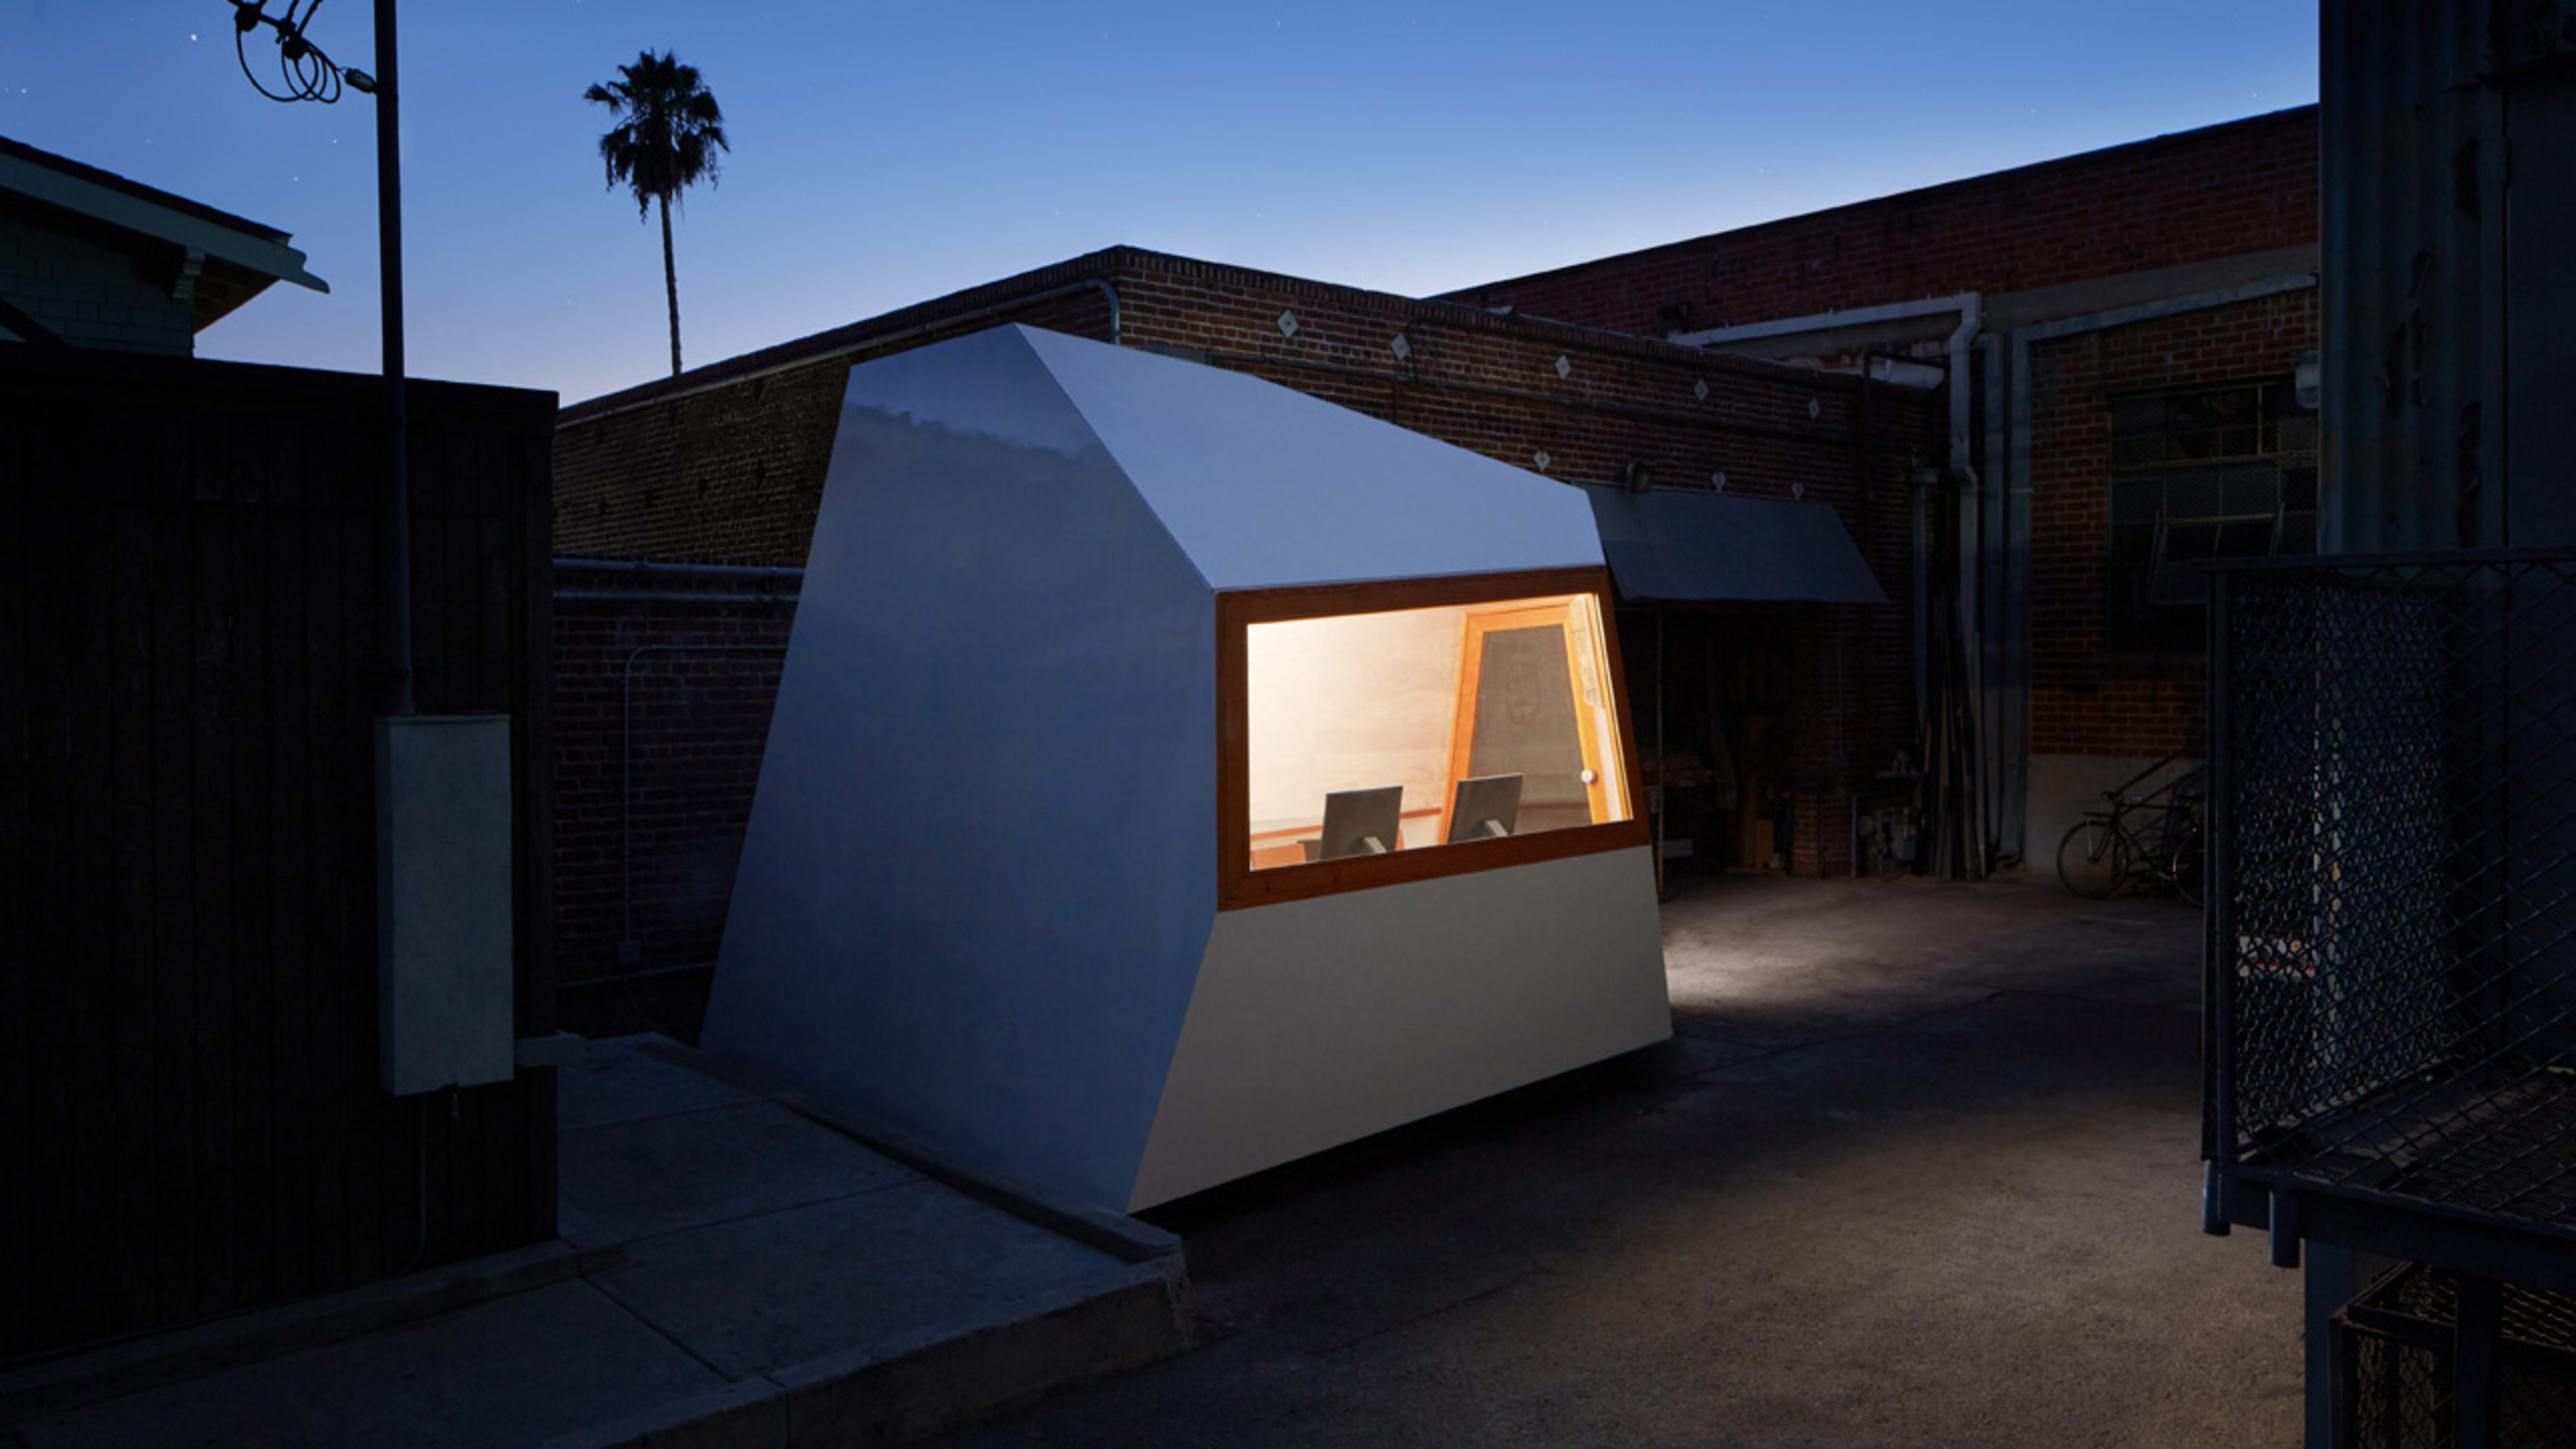 I want this minimalist mini-office so badly